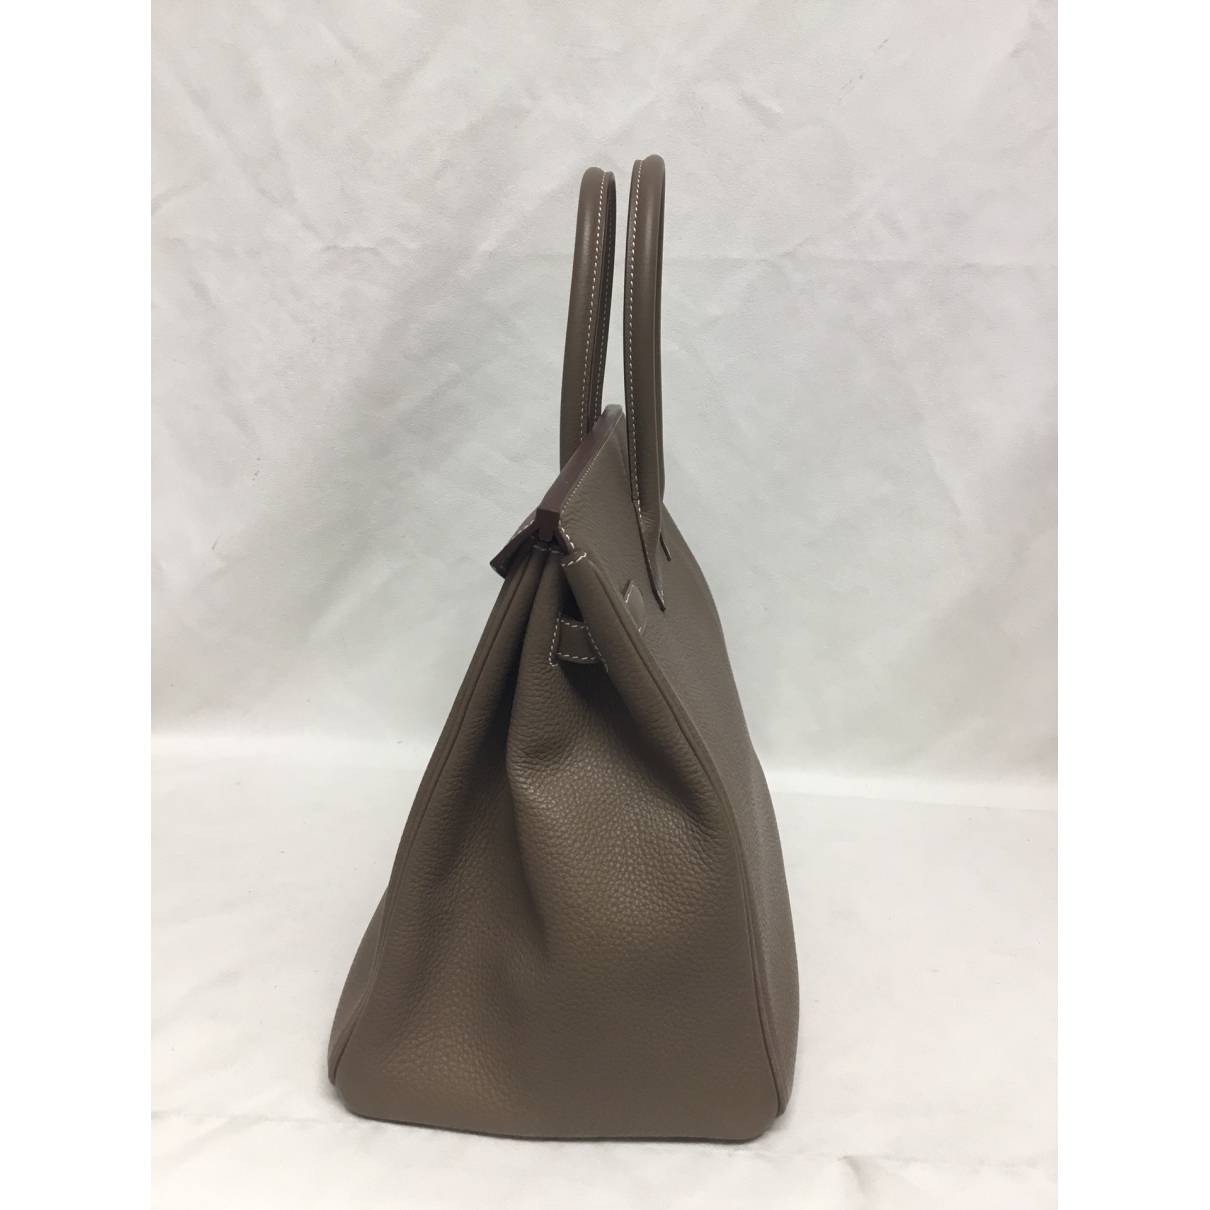 Hermès - Authenticated Birkin 35 Handbag - Leather Khaki Plain for Women, Very Good Condition